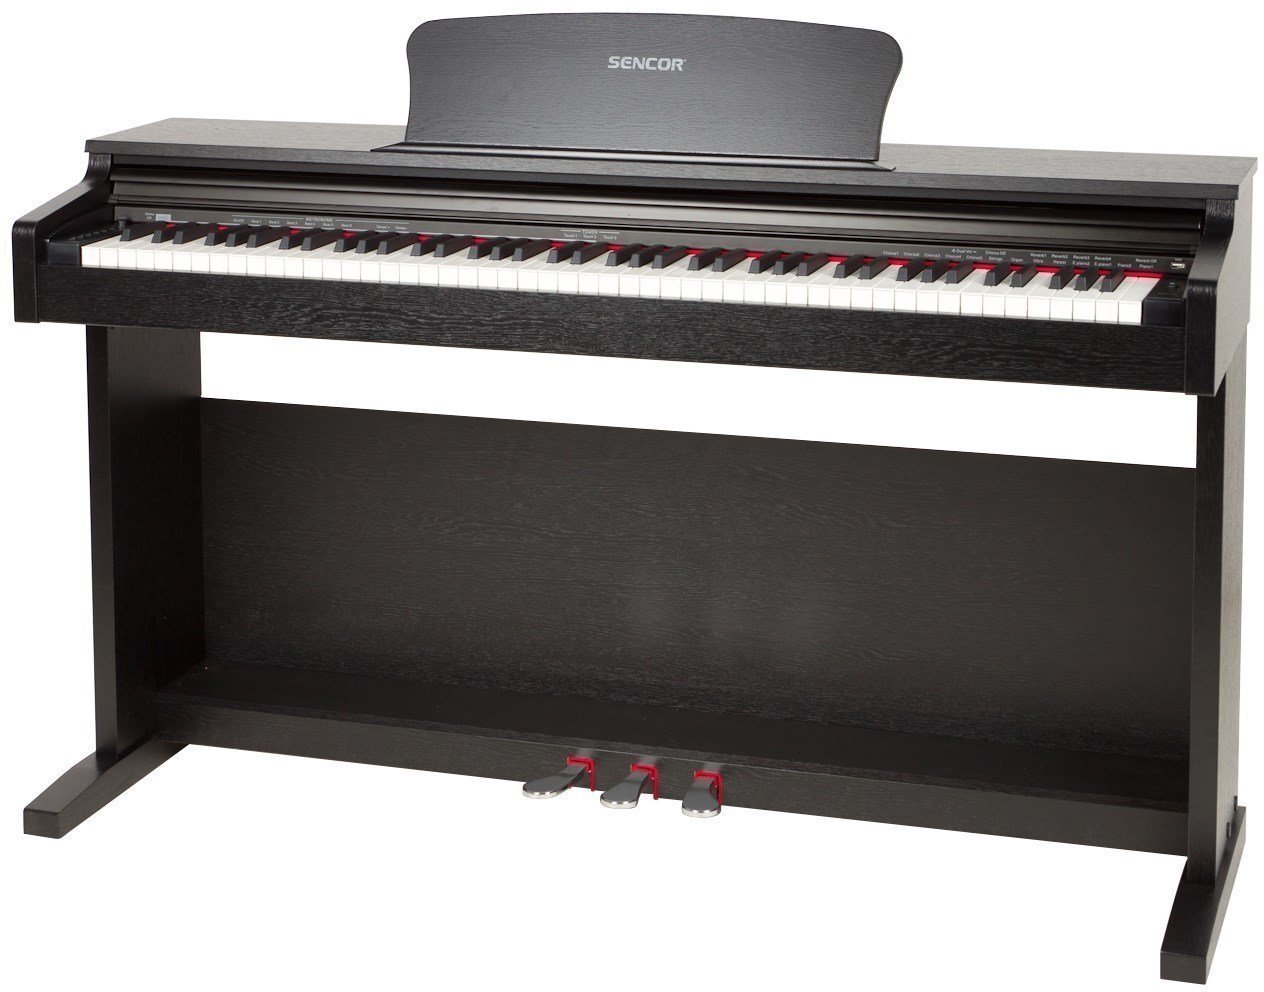 Digitale piano SENCOR SDP 100 Zwart Digitale piano